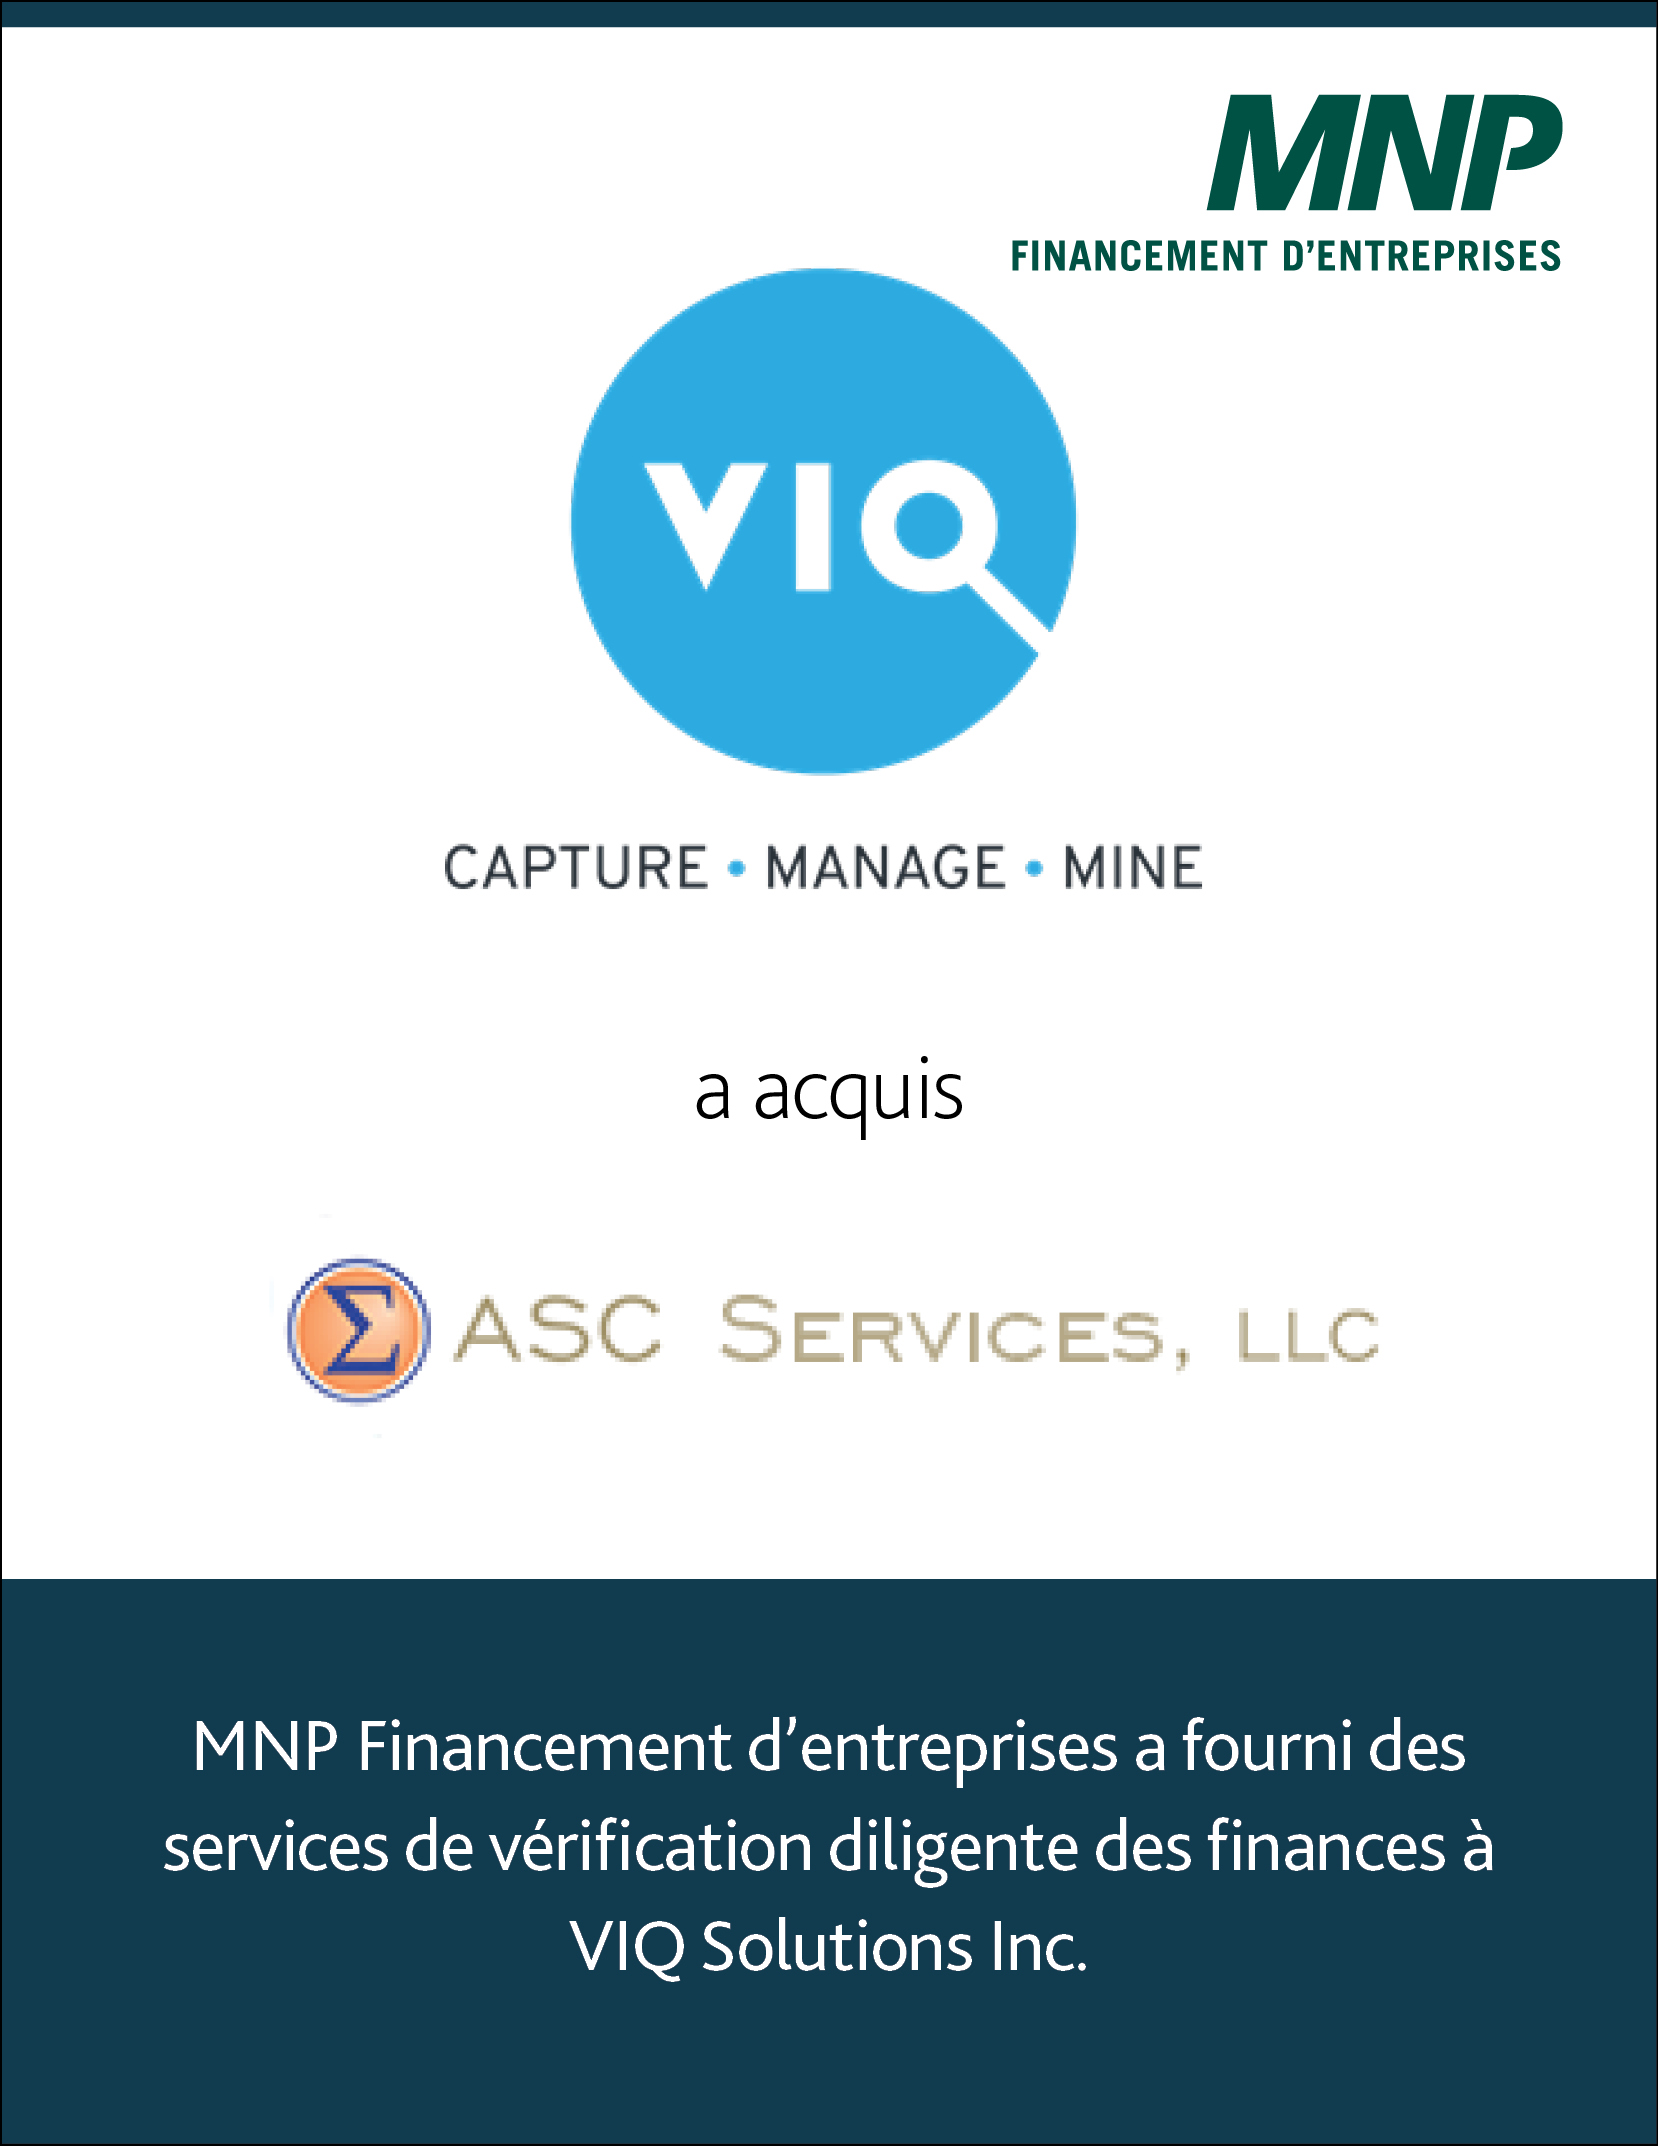 VIQ Solutions Inc. a acquis ASC Partners, SARL.